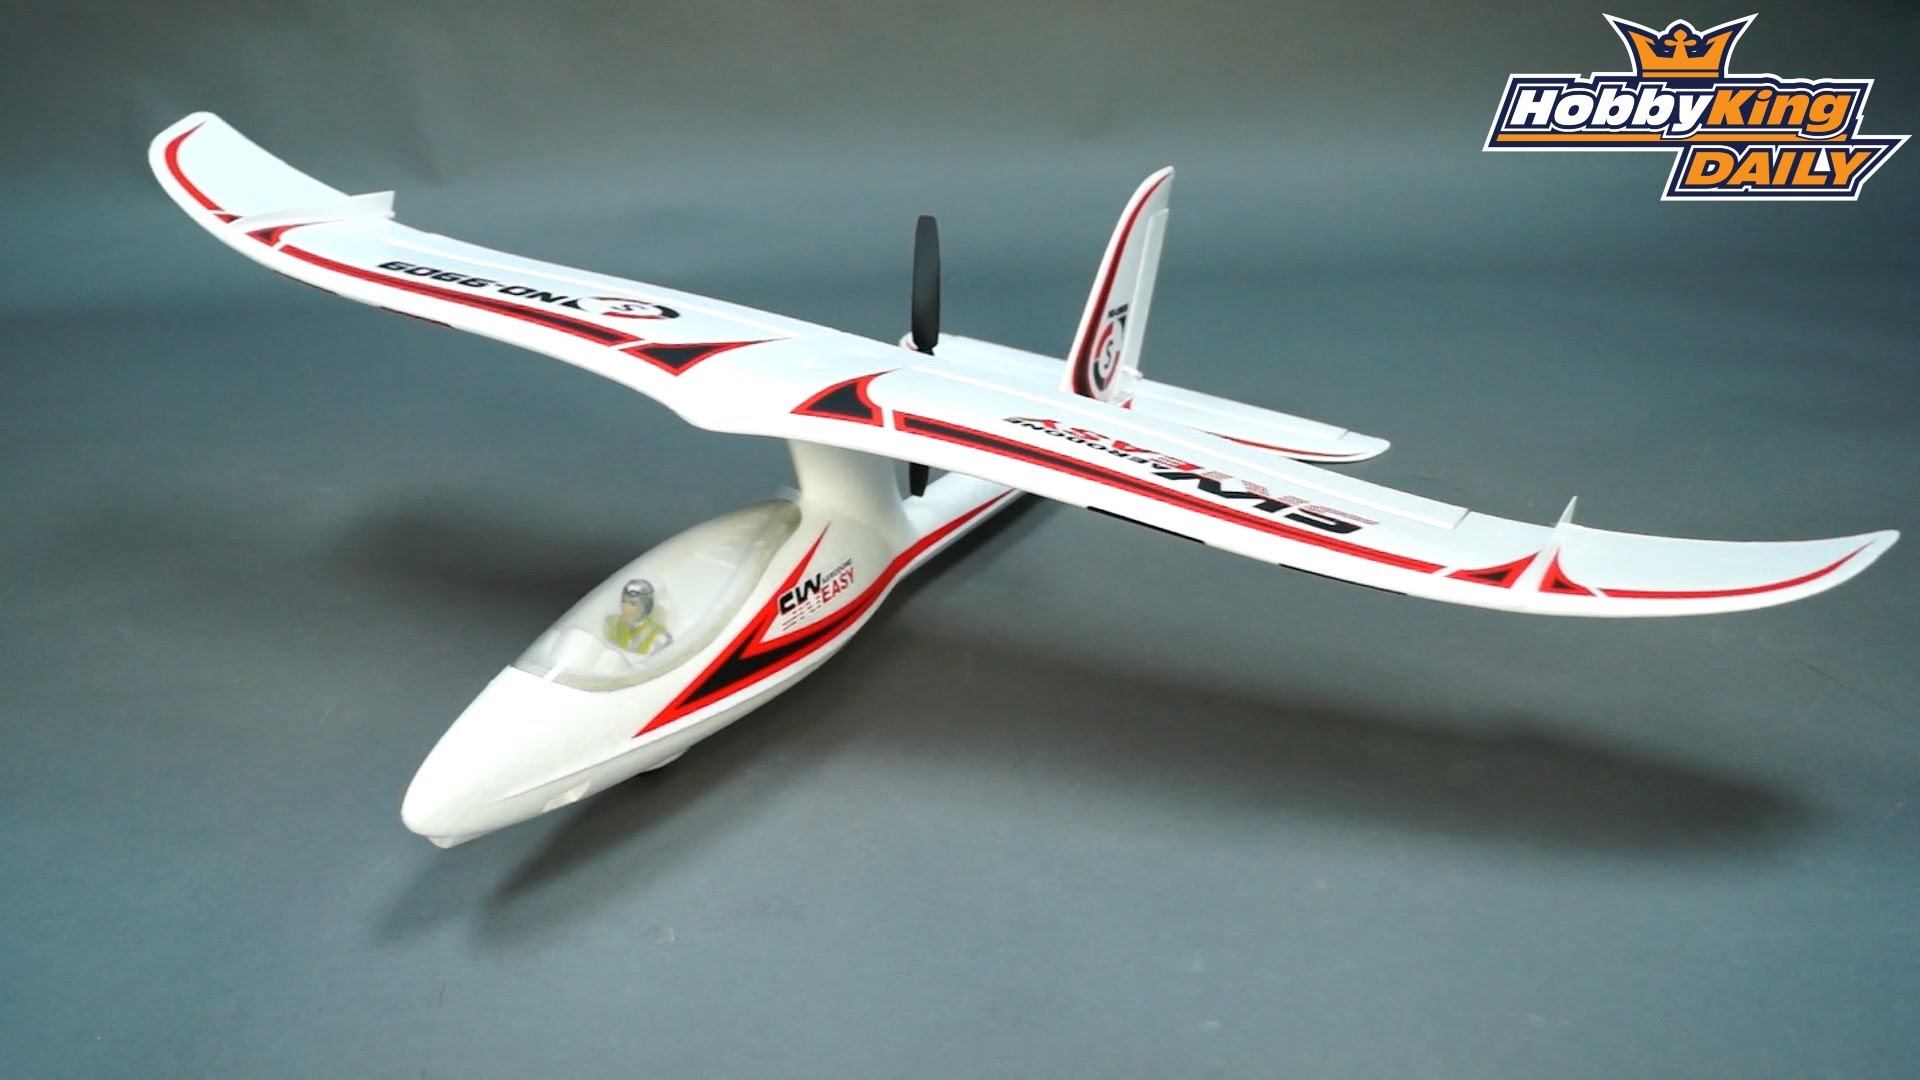 HobbyKing Daily - Sky Easy Glider 2.4G 4Ch 1050mm RTF - YouTube